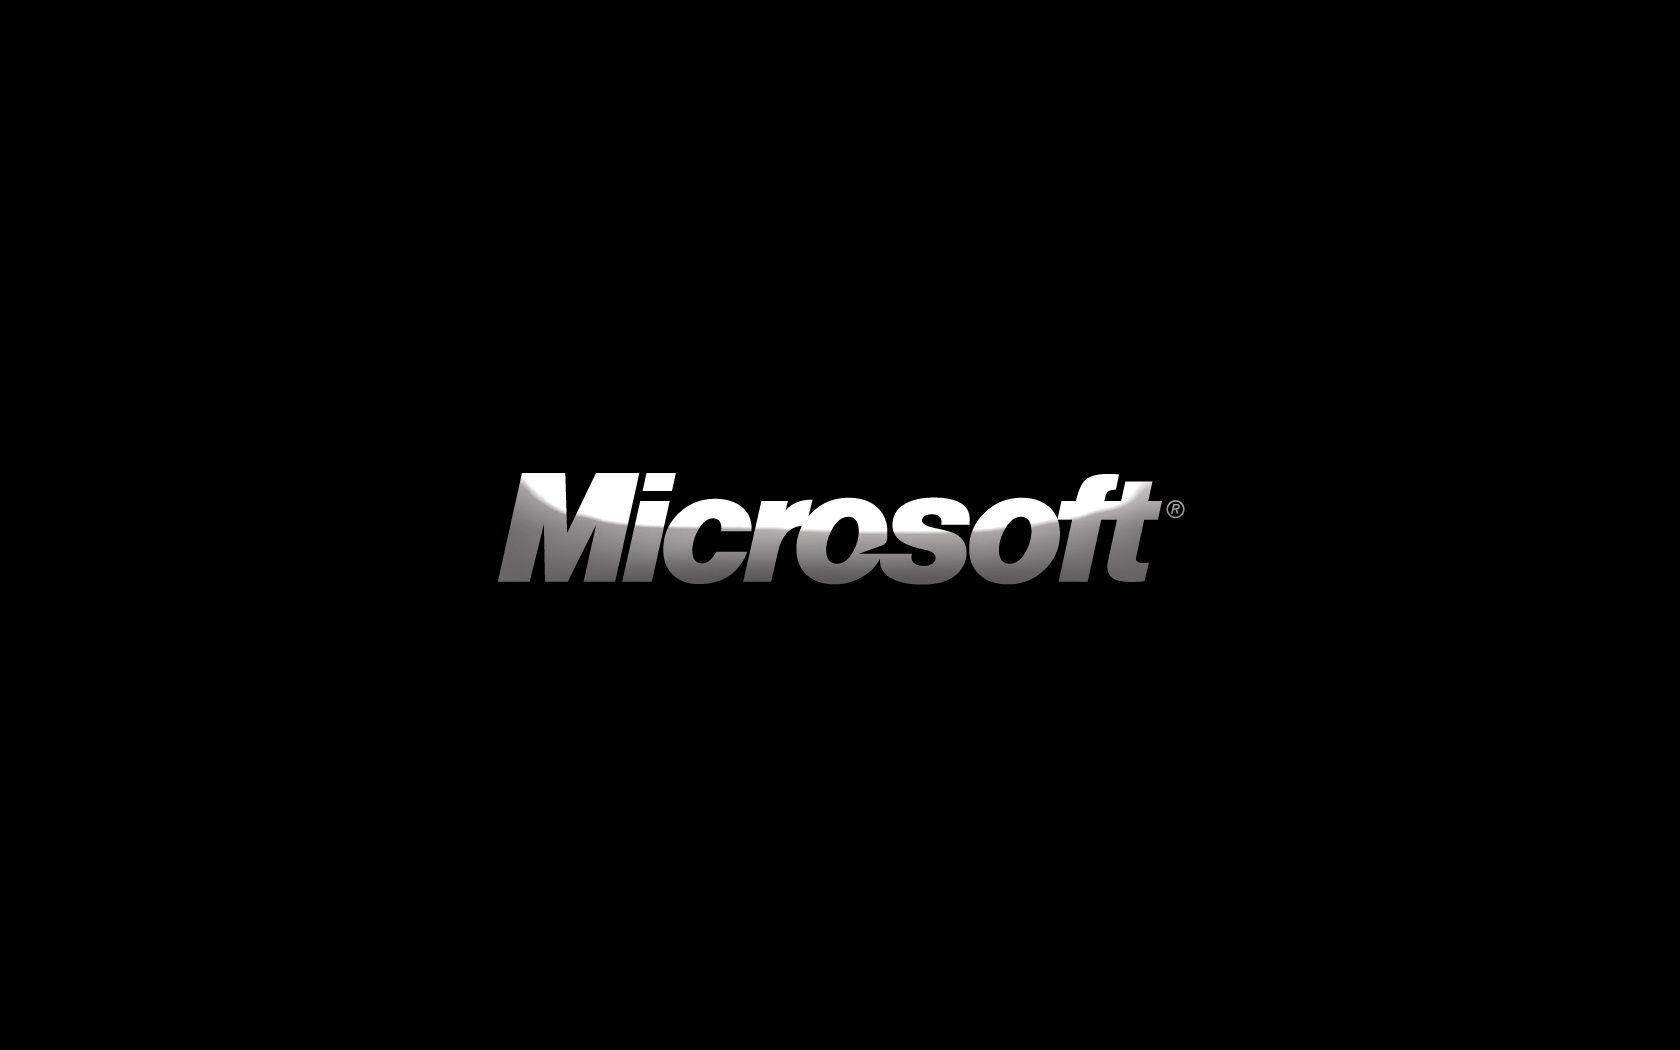 Microsoft Black Wallpapers - Top Free Microsoft Black Backgrounds ...